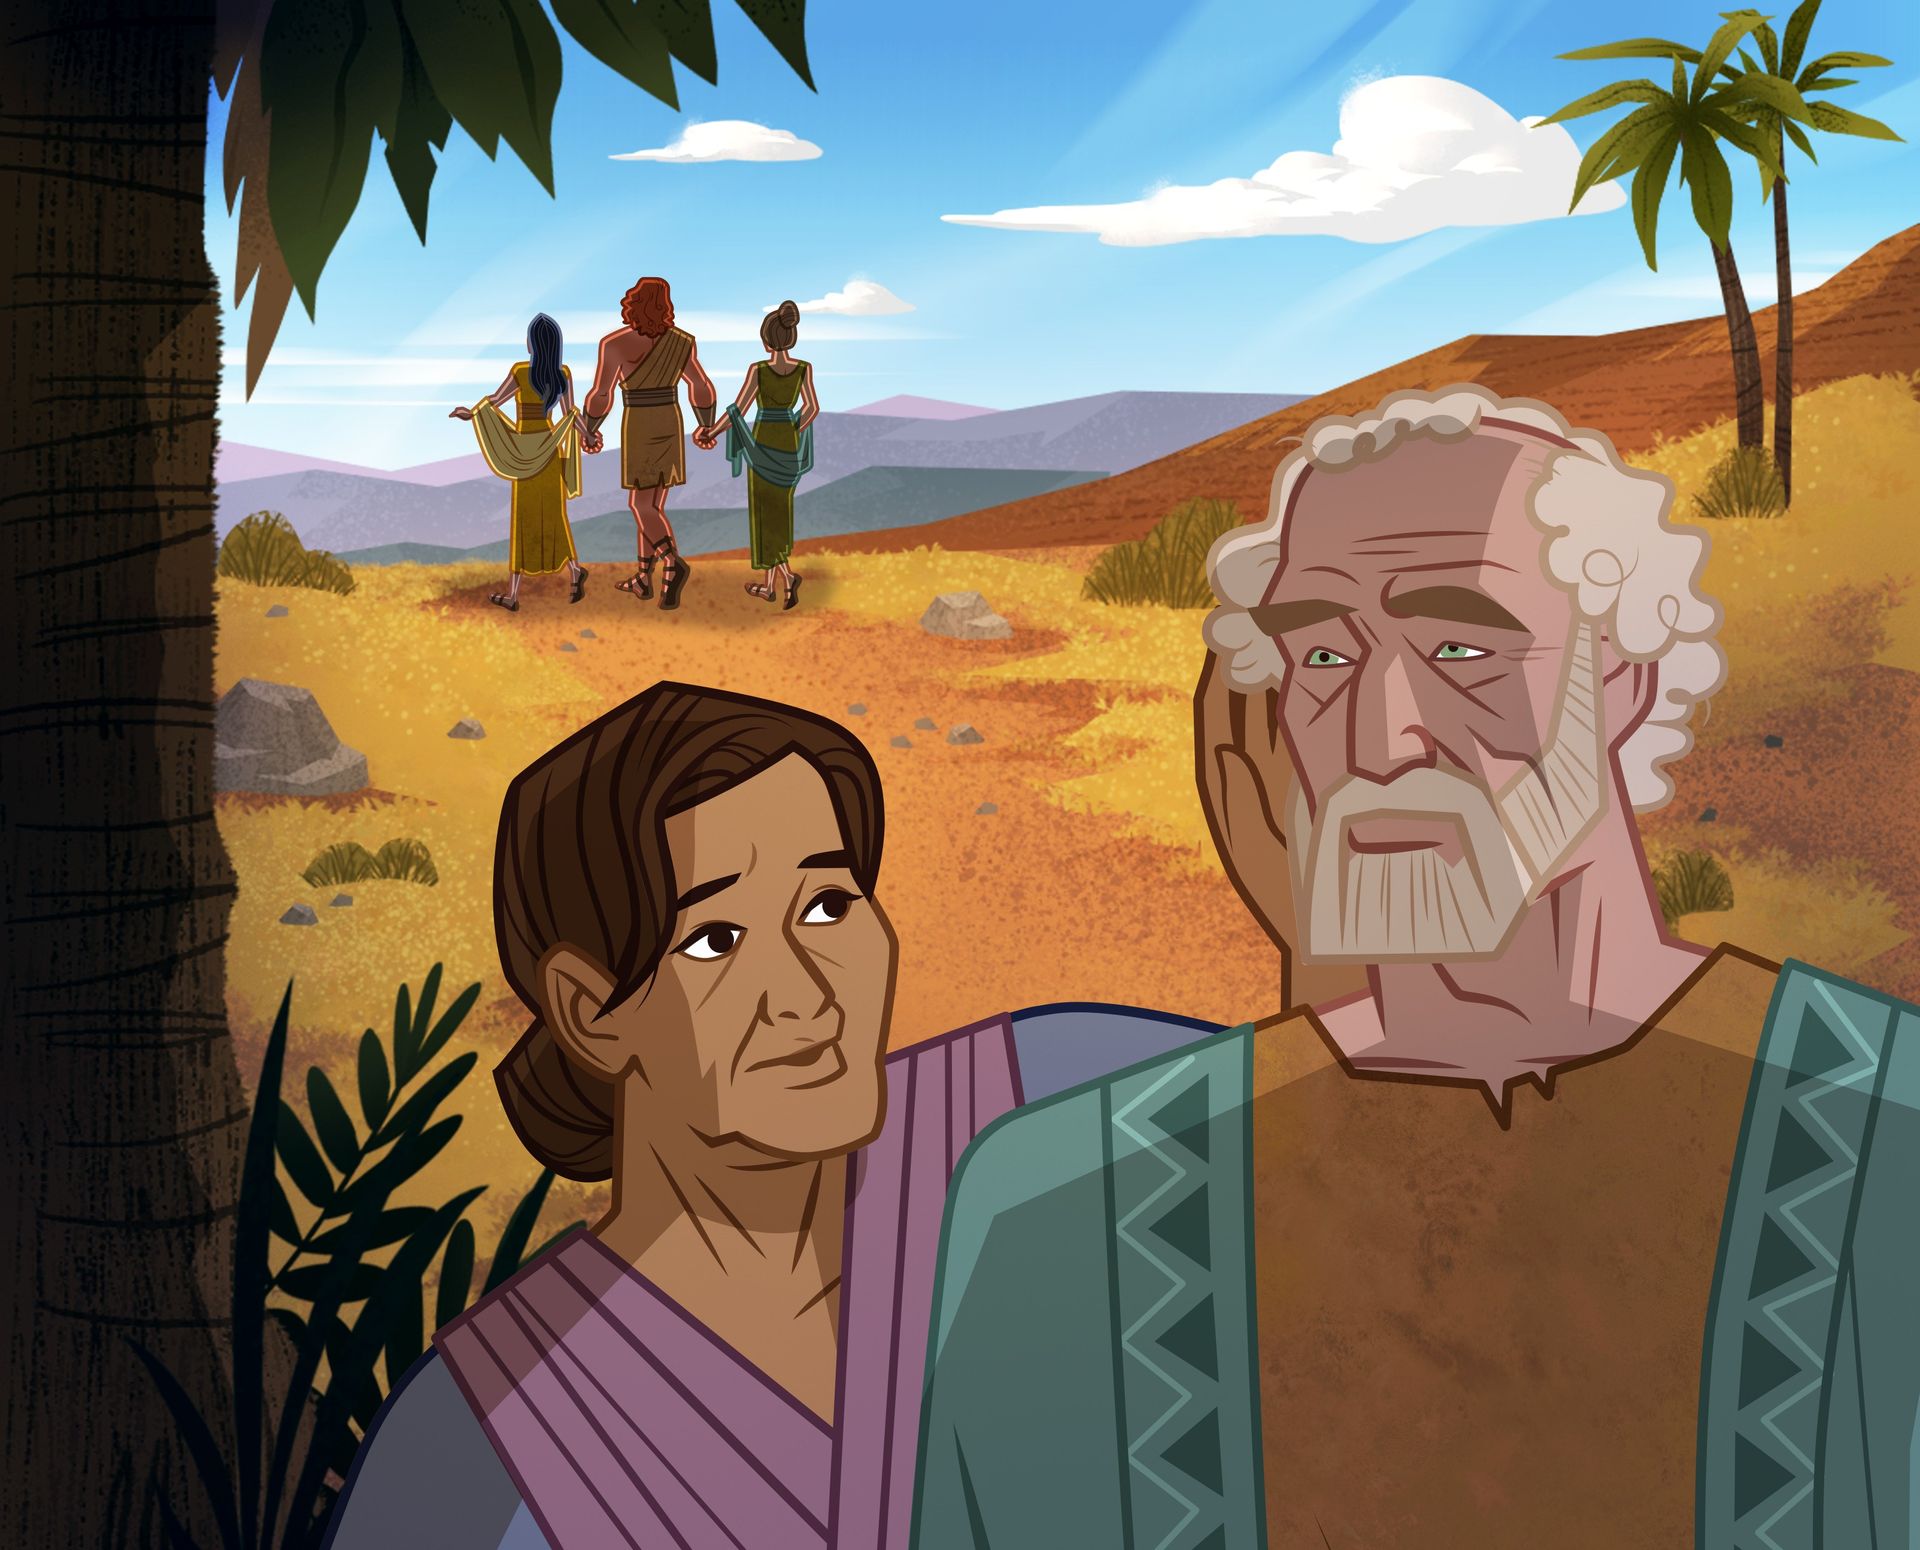 Illustration of Rebekah and Issac. 
Genesis 26:34–35